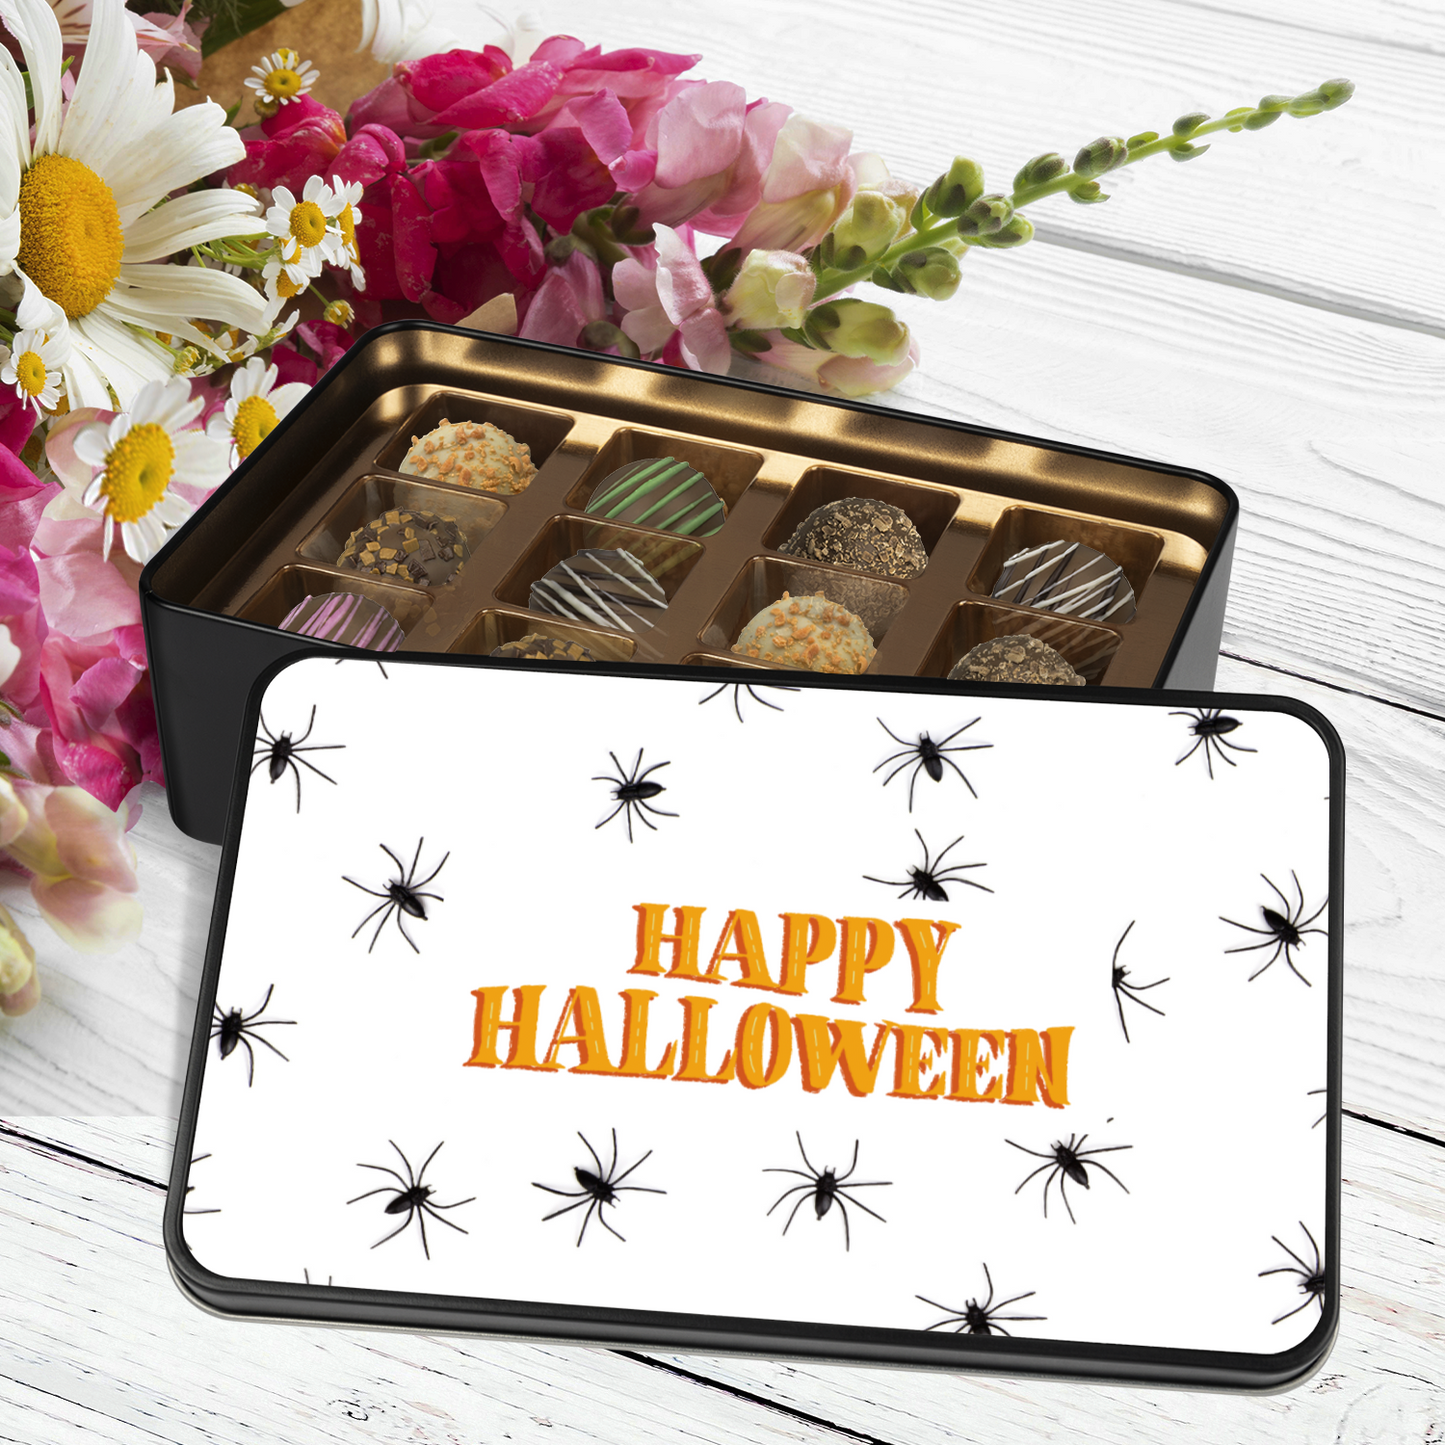 Halloween Chocolate Truffles Gift Box - Keepsake Tin